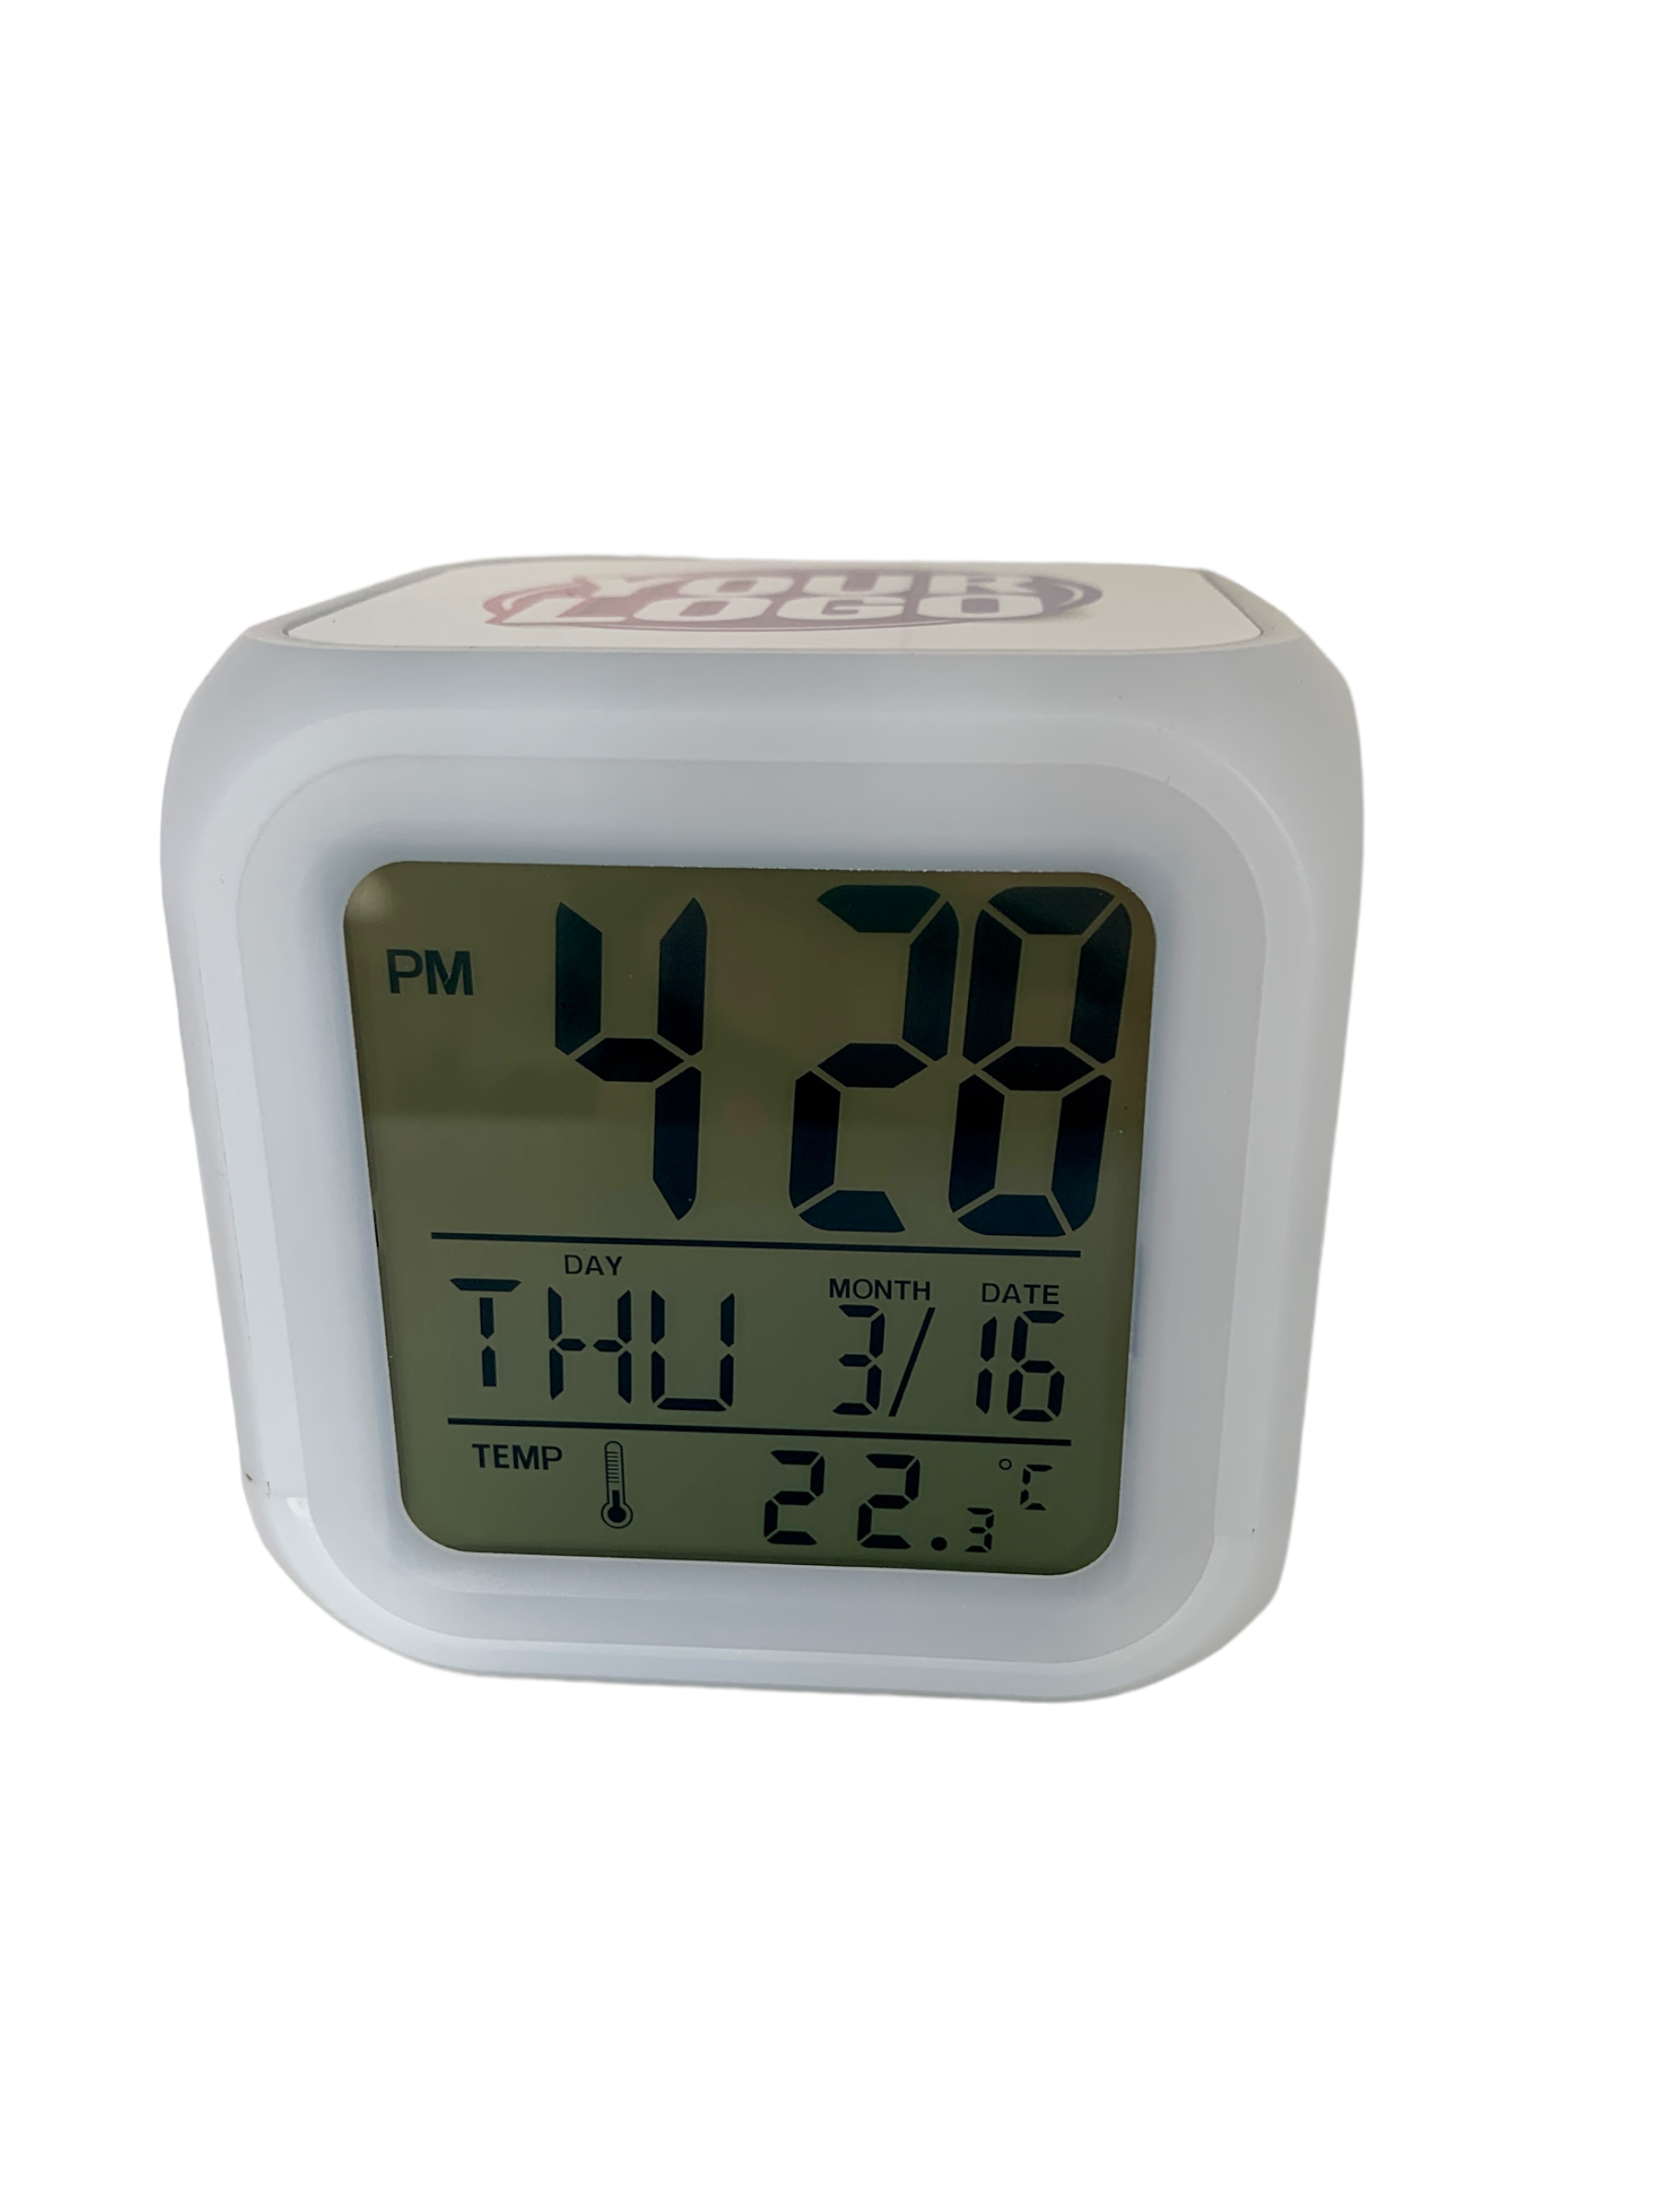 Alarm clock Branded Promotional Merchandise